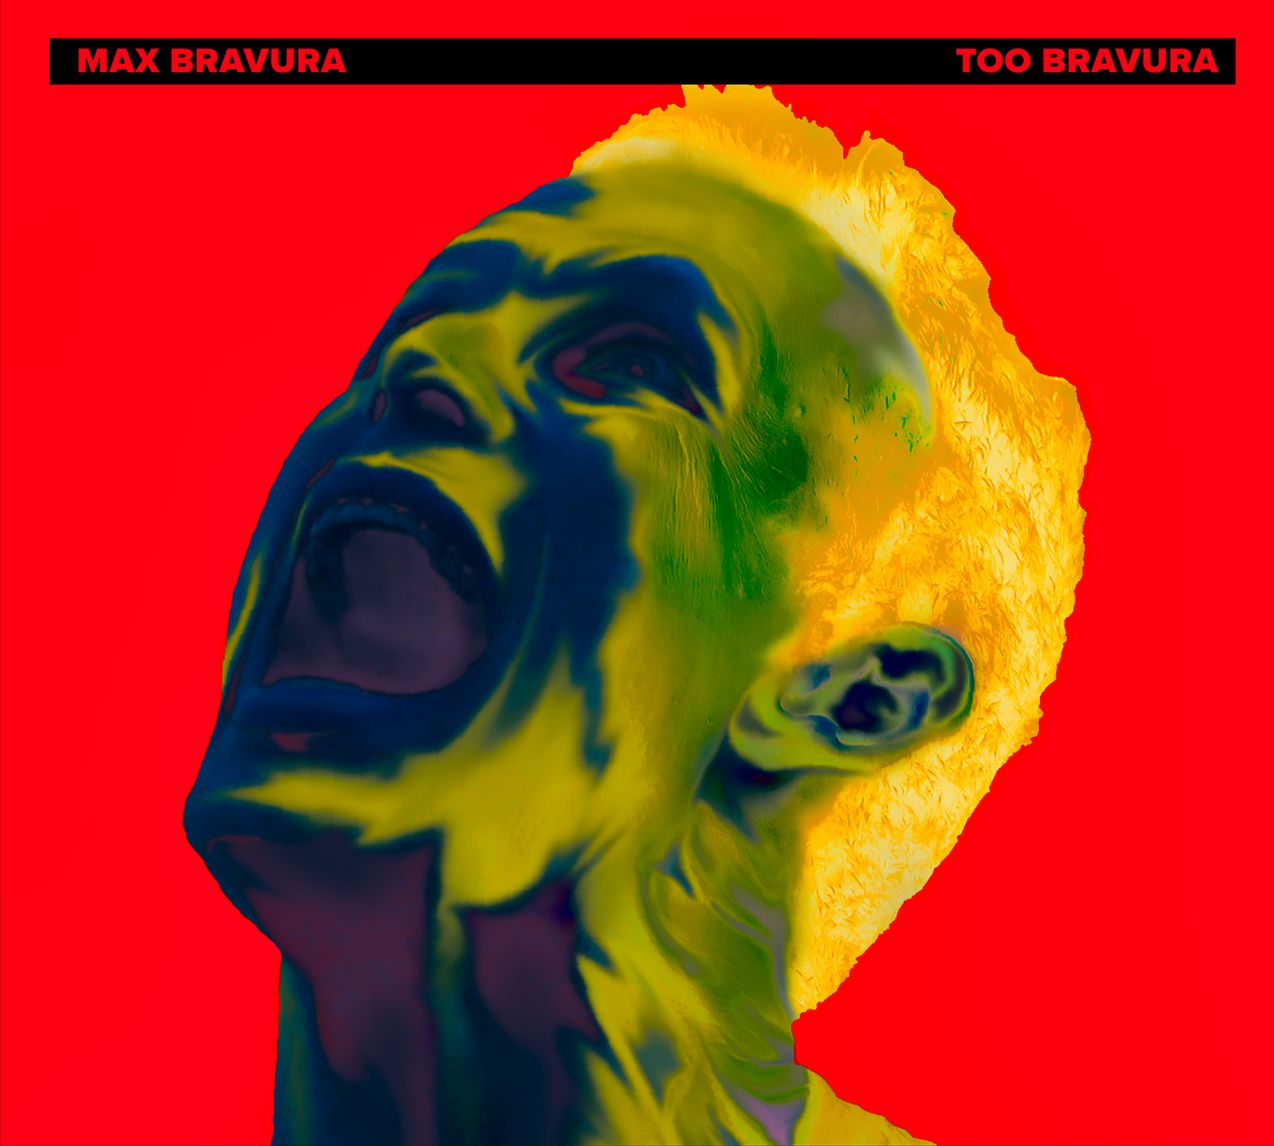 Max Bravura: Too Bravura